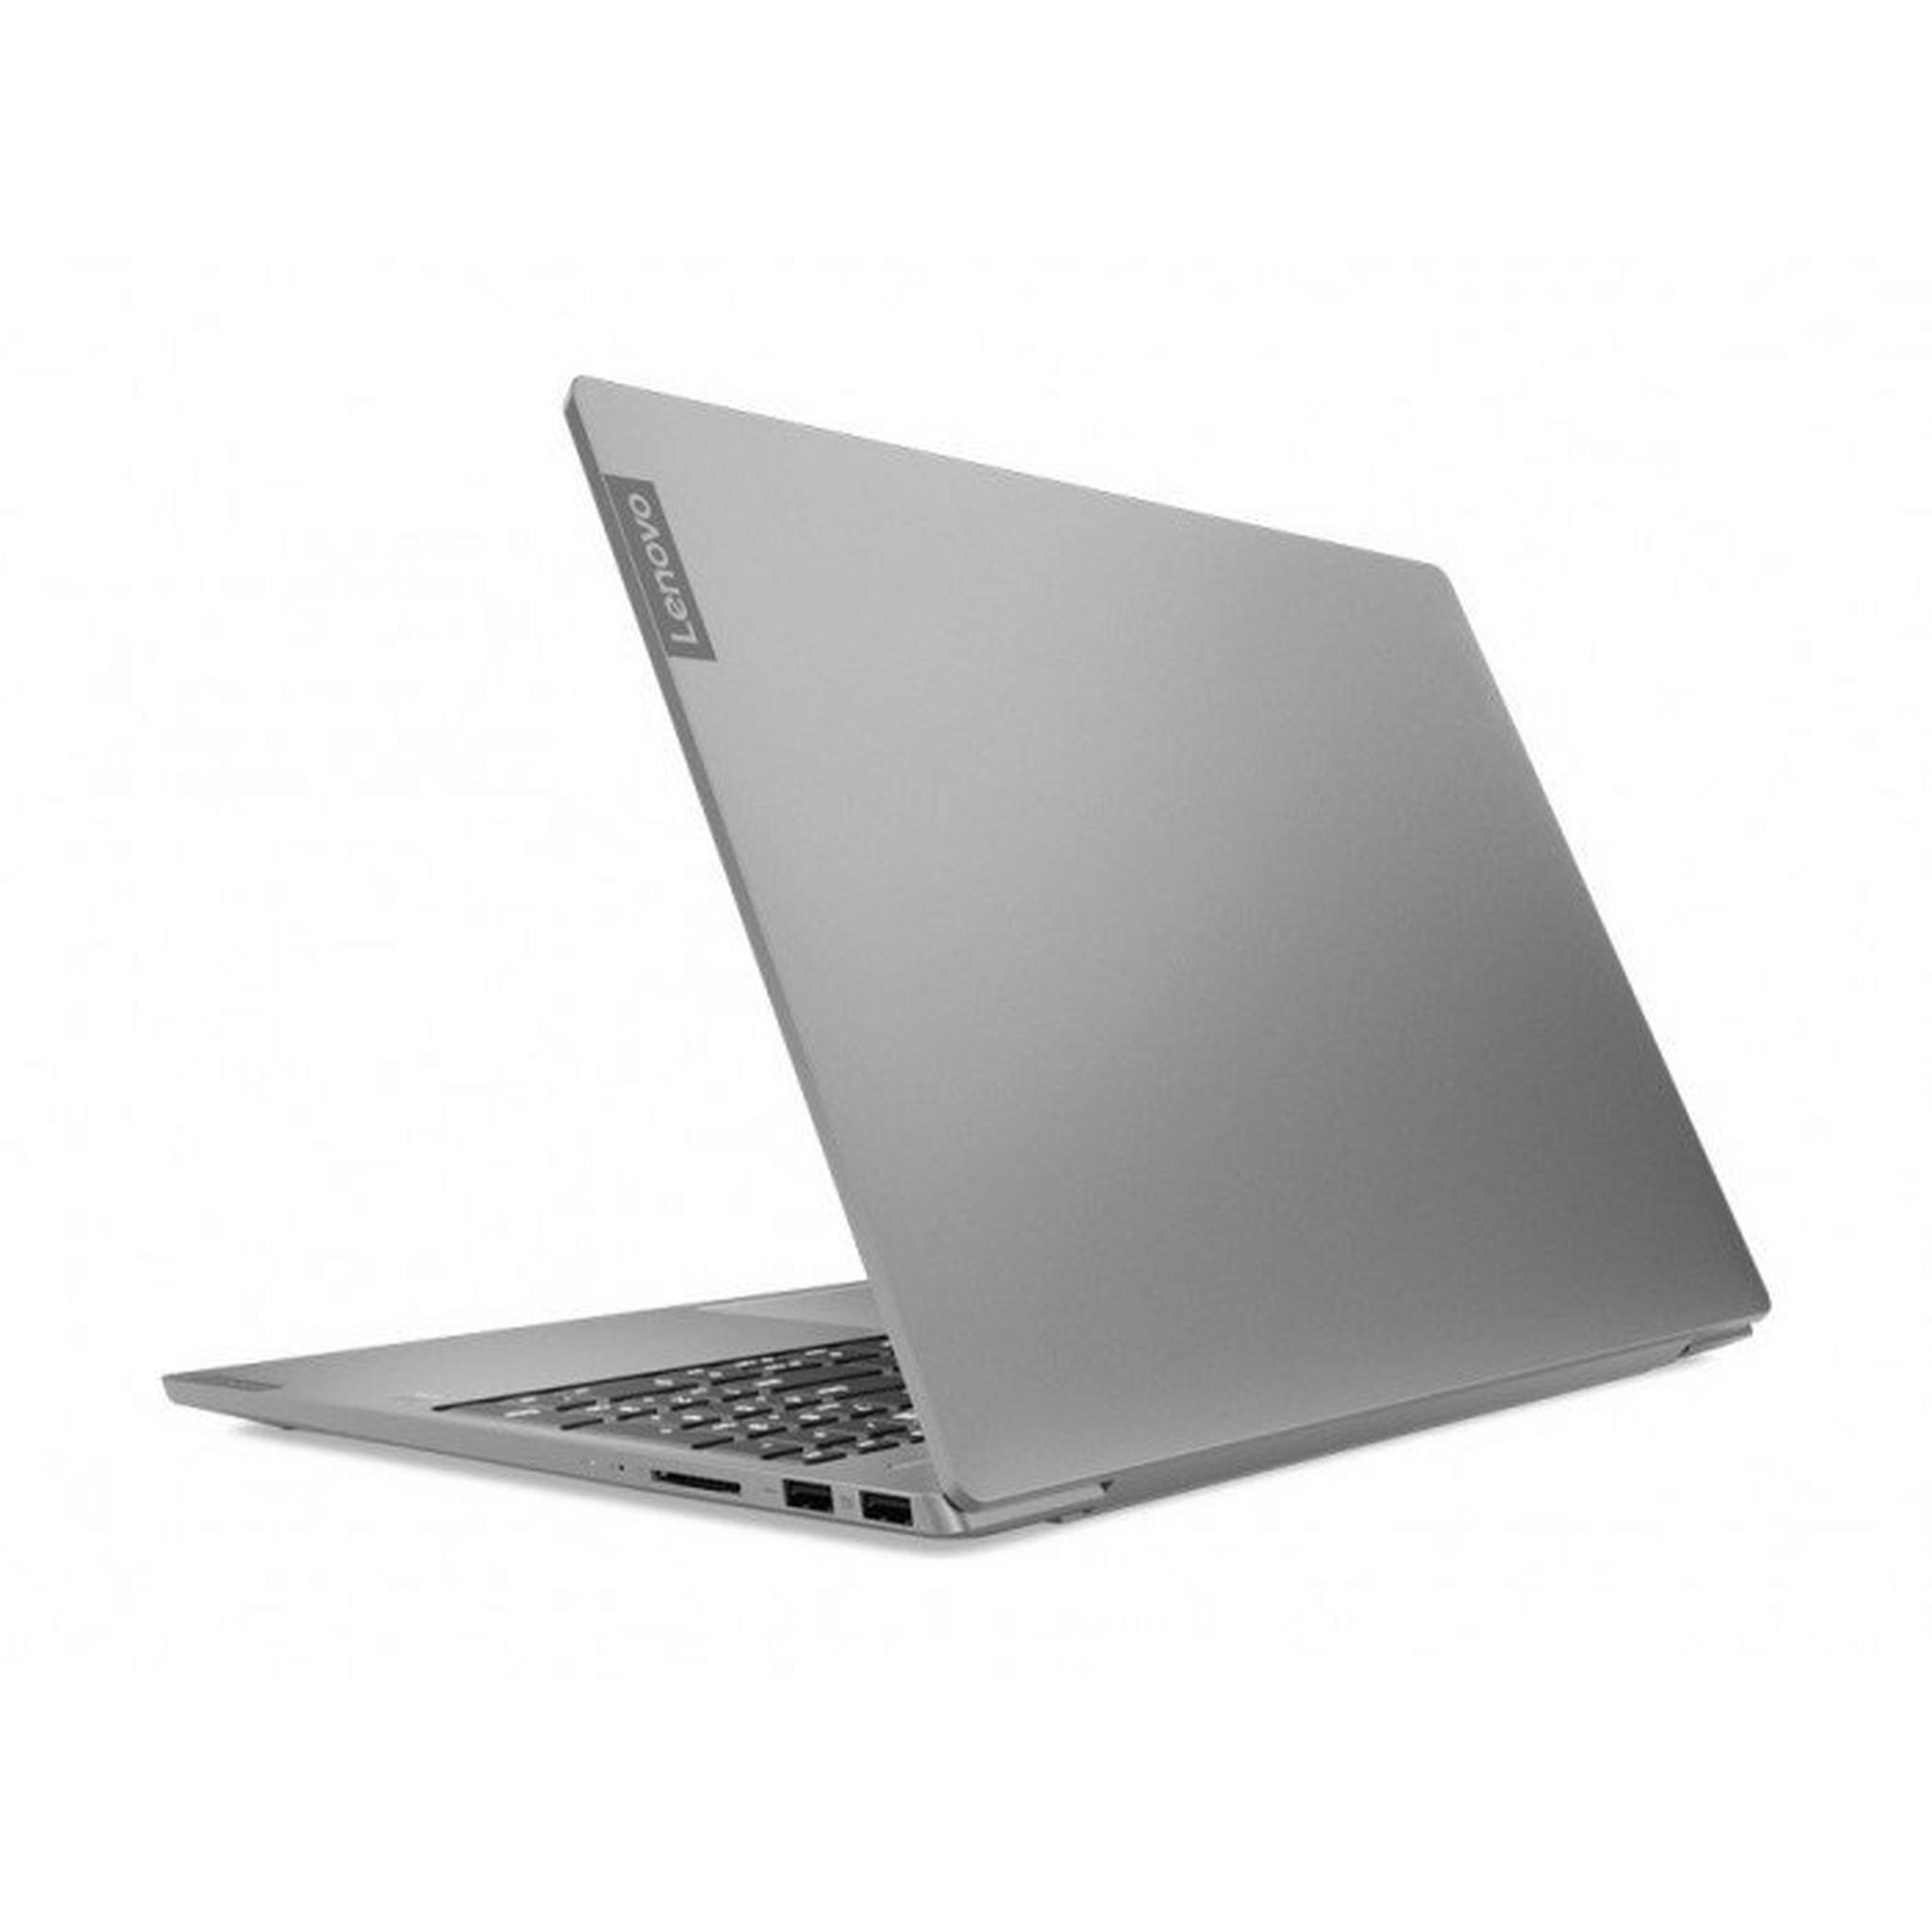 Lenovo Ideapad S340 Core i5 8GB RAM 1TB HDD + 256 SSD 15.6-inch Laptop - Grey